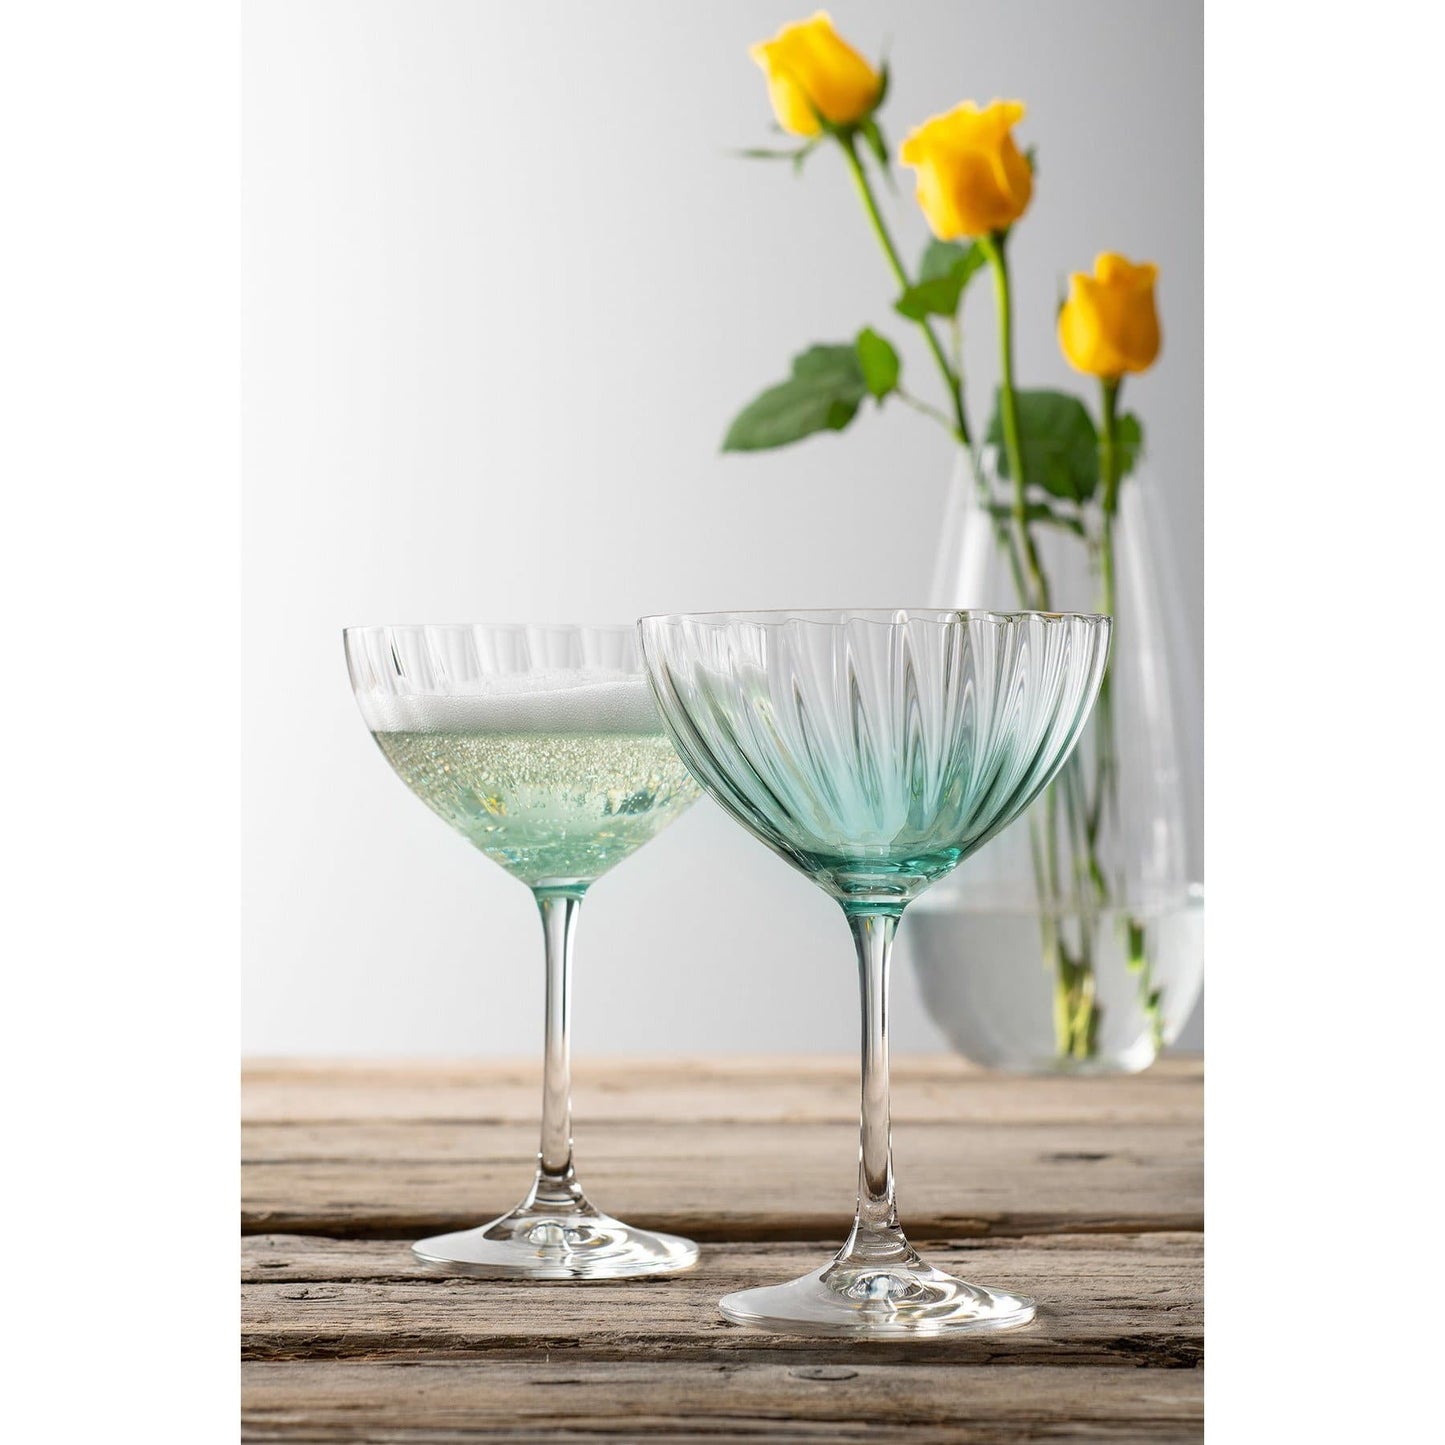 Erne Saucer Champagne Glass Set of 2 - Aqua